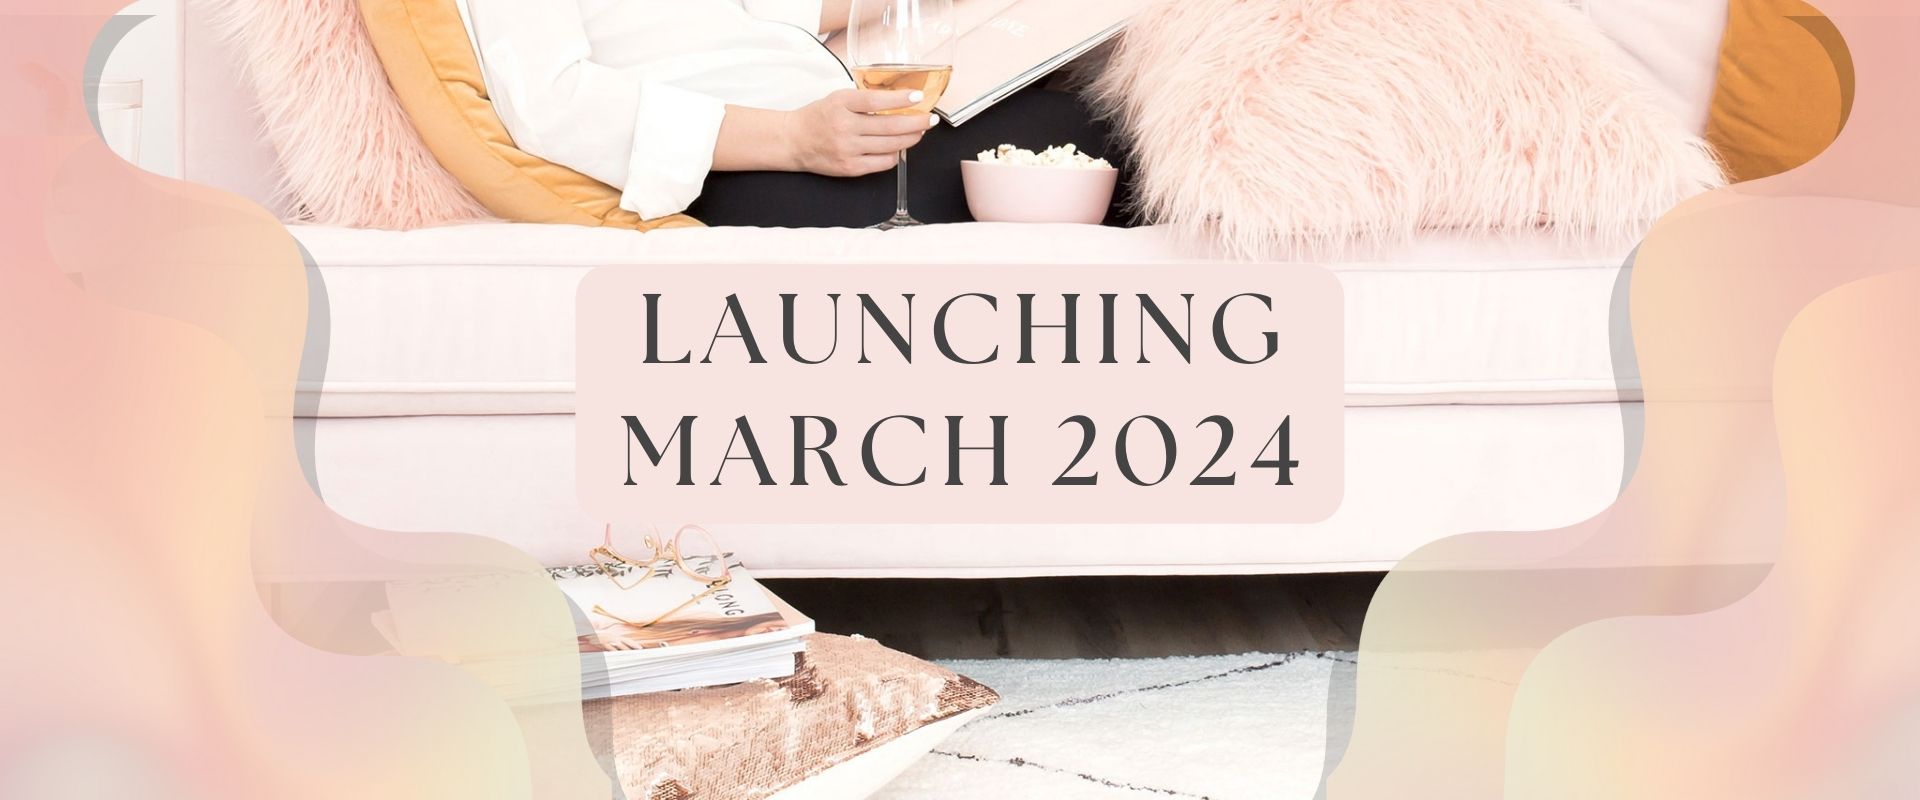 Jacky + Co. Web Shop Launching March 2024